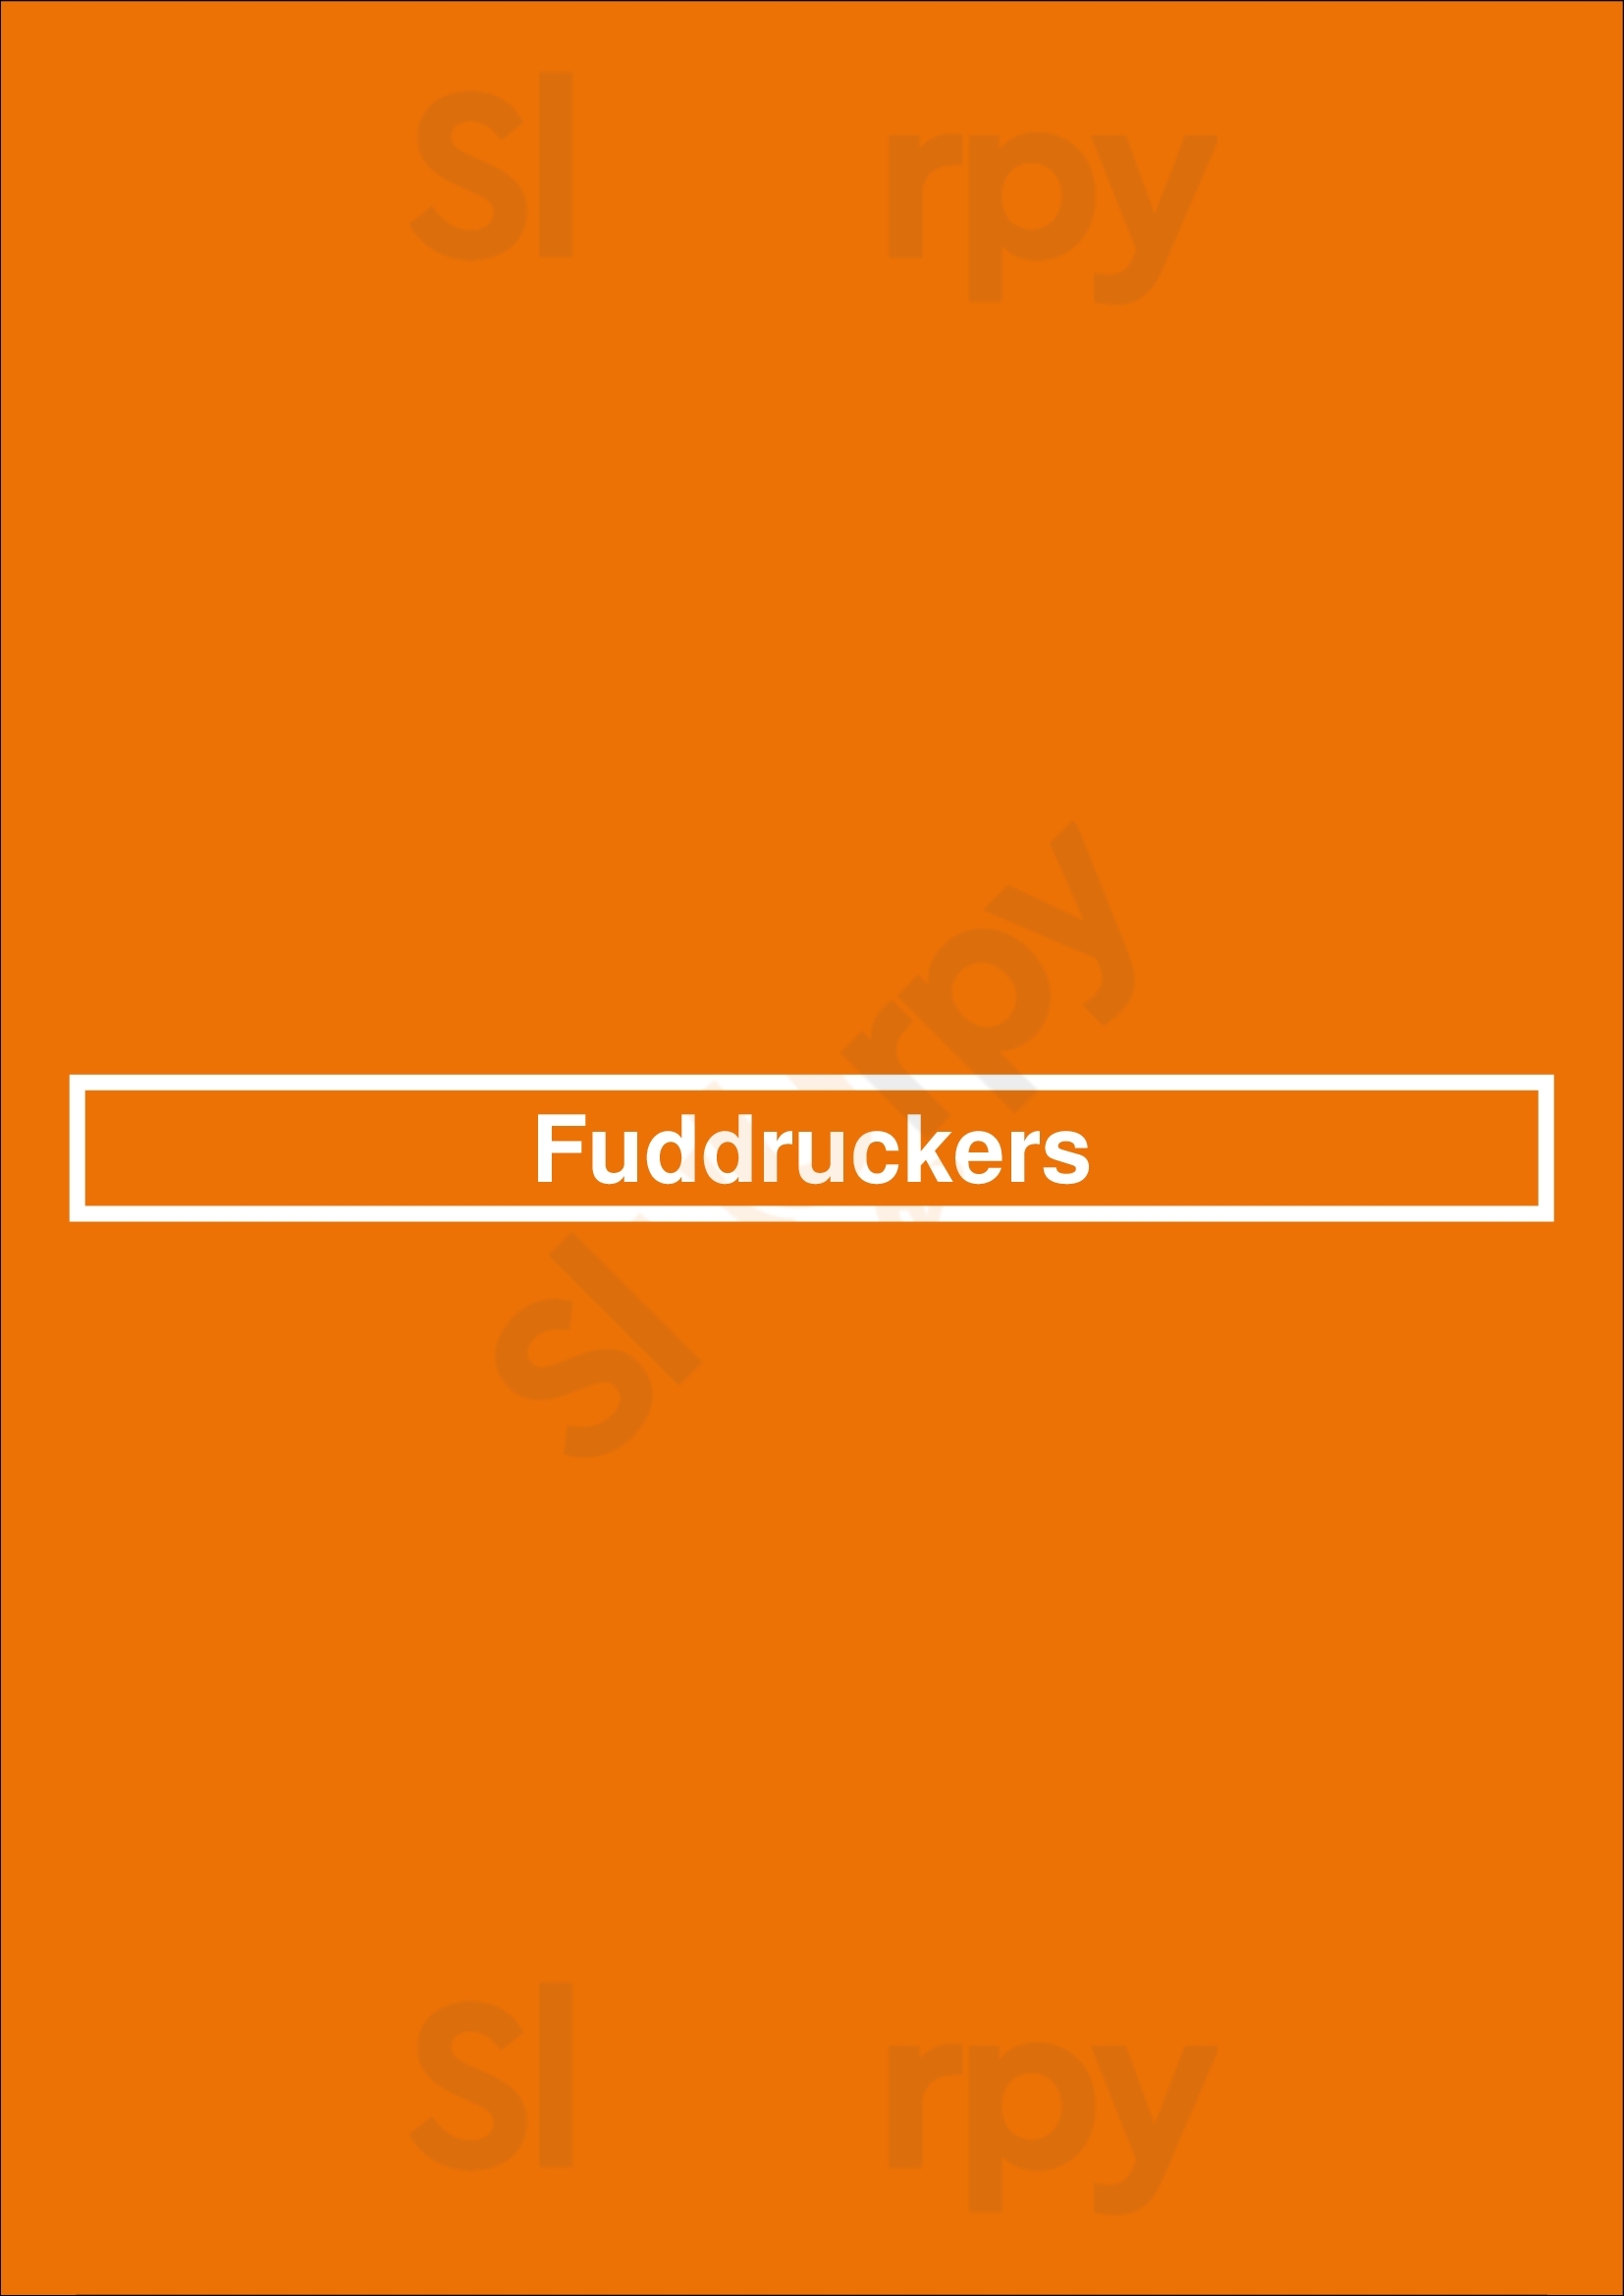 Fuddruckers Houston Menu - 1